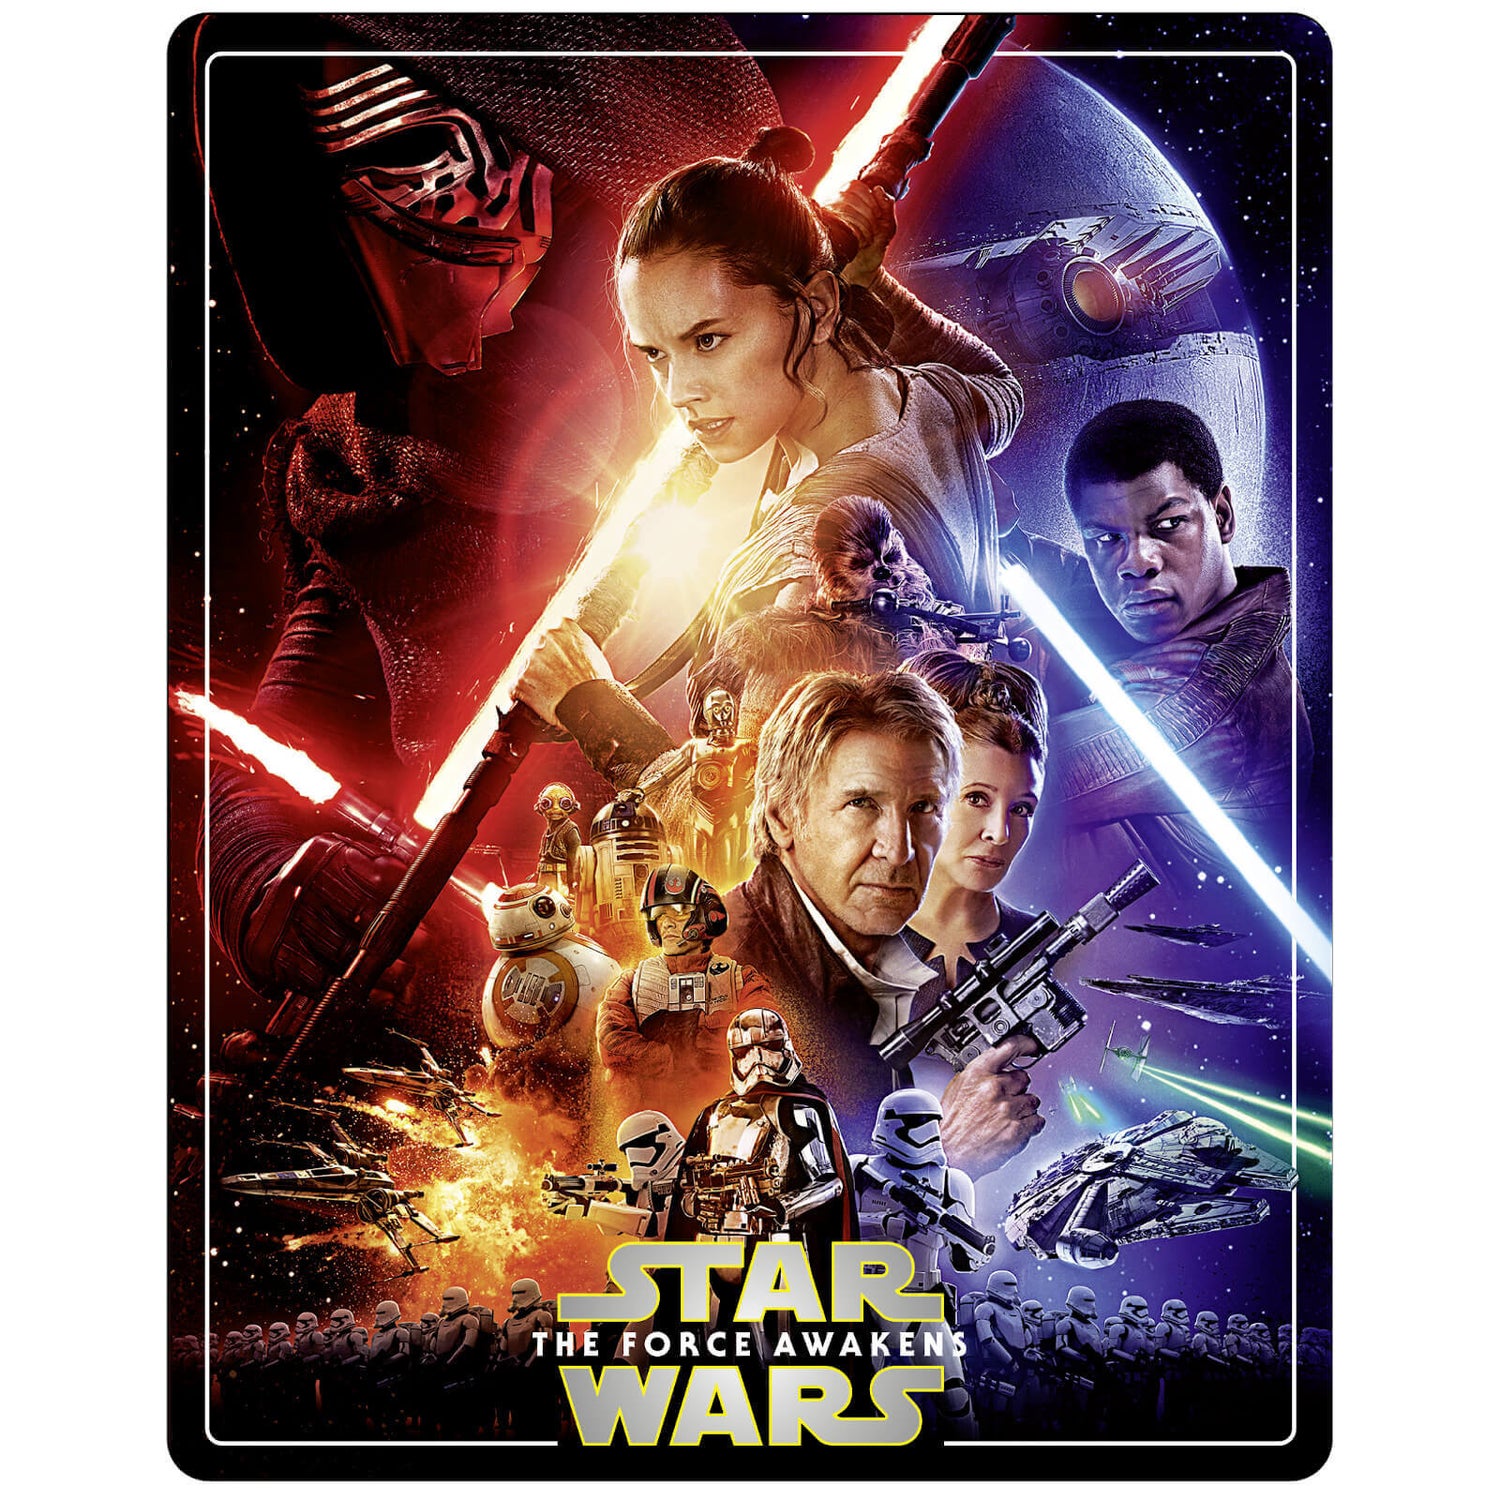 Star Wars Episode VII: The Force Awakens - Zavvi Exclusive 4K